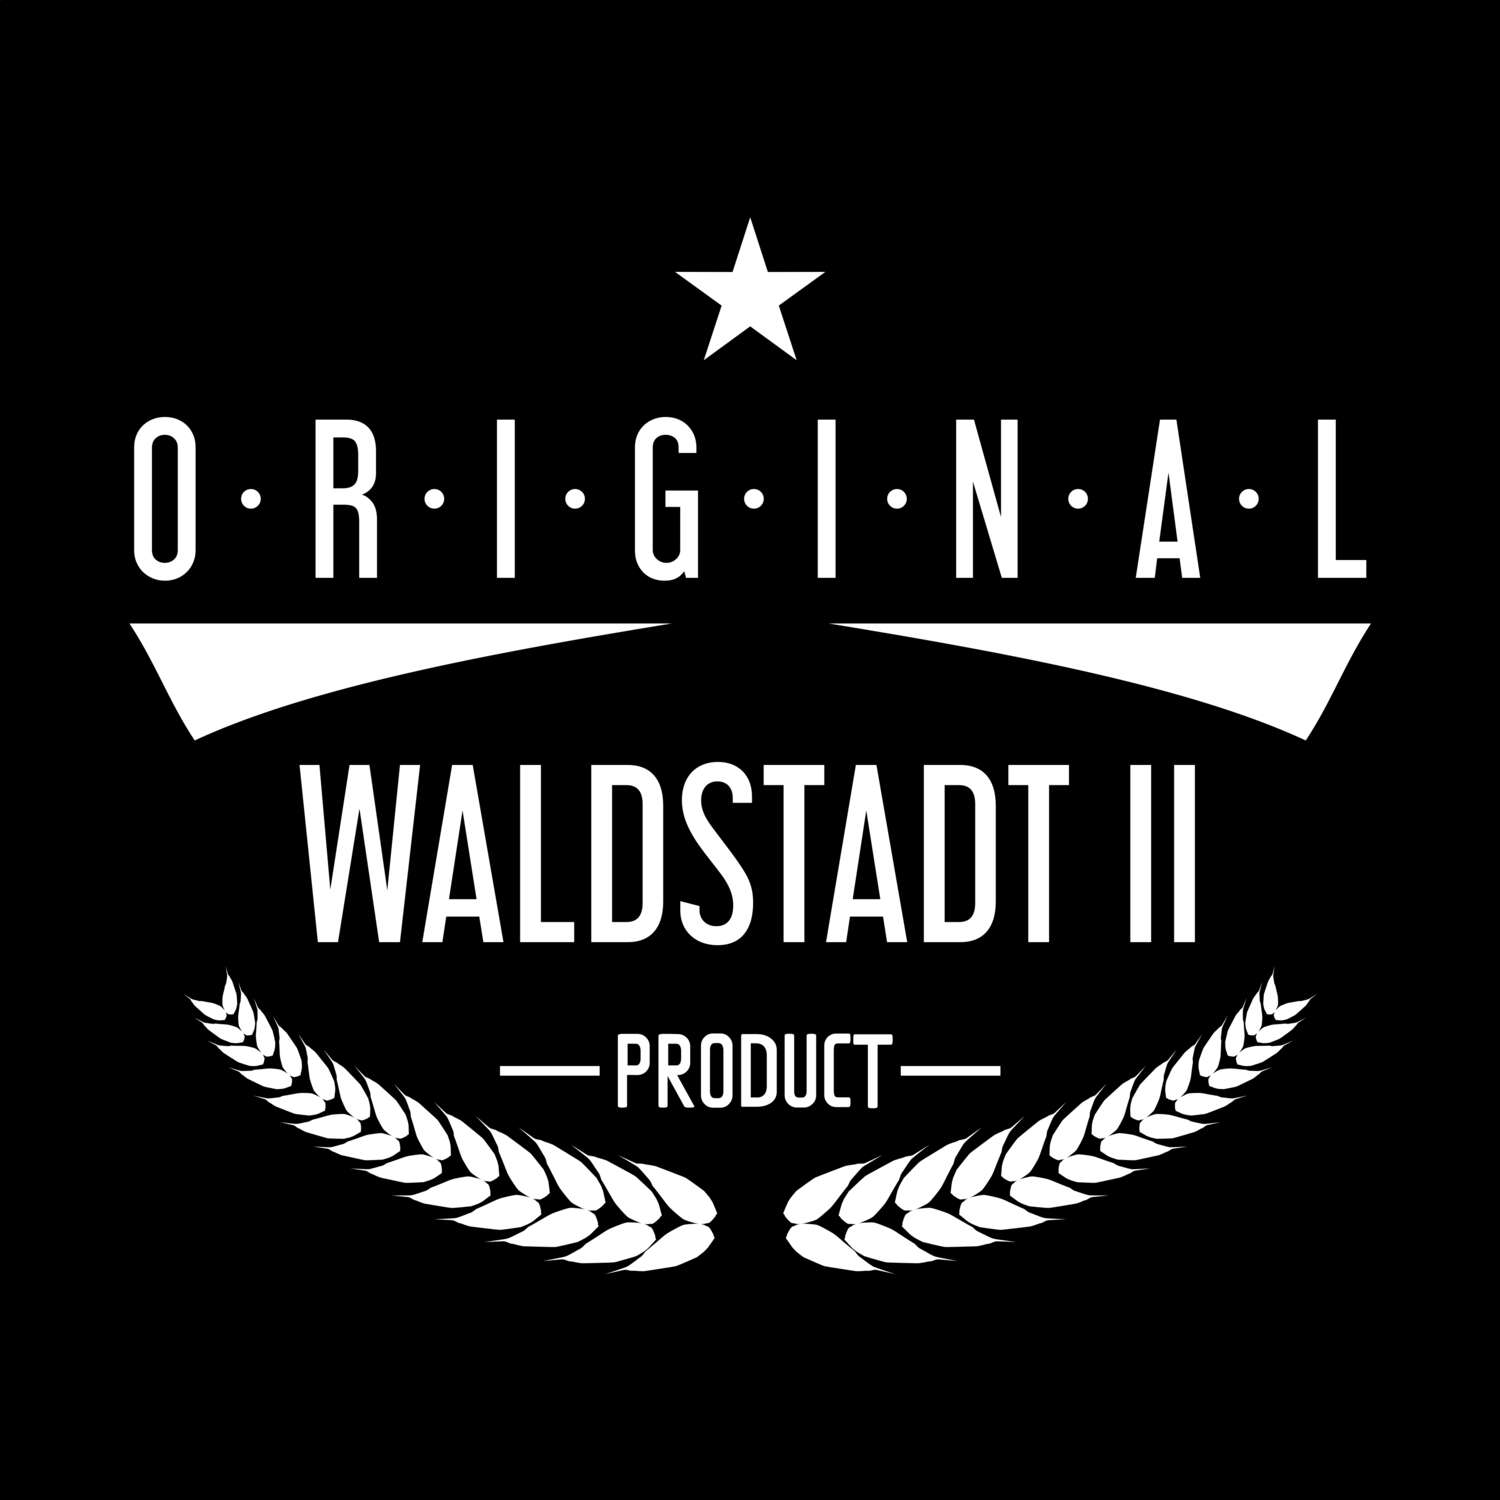 Waldstadt II T-Shirt »Original Product«